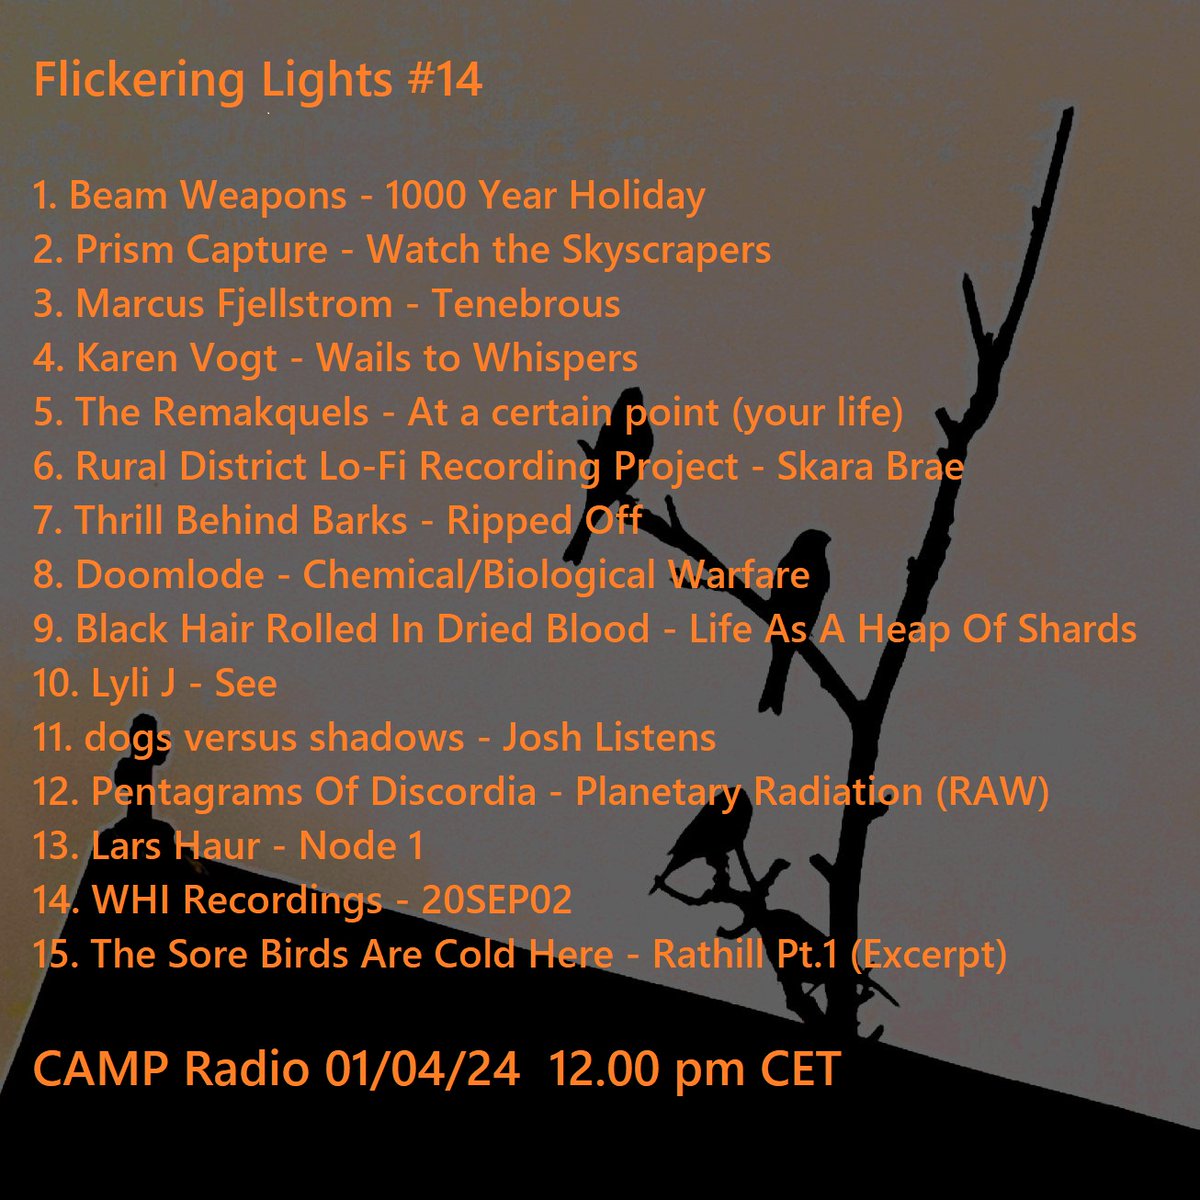 Flickering Lights #14 airing @listen_camp 01/04/24 12pm CET @no_birds_here @G_R_M_M_S_K @WhiRecordings @LarsHaur @TheNewEmphatic @Narvvhals_ @Soulscorch101 @karenvogtmusic @matthewsedition @heavycloudhaze @HGR_label @SDuplicator @DOOMLODE